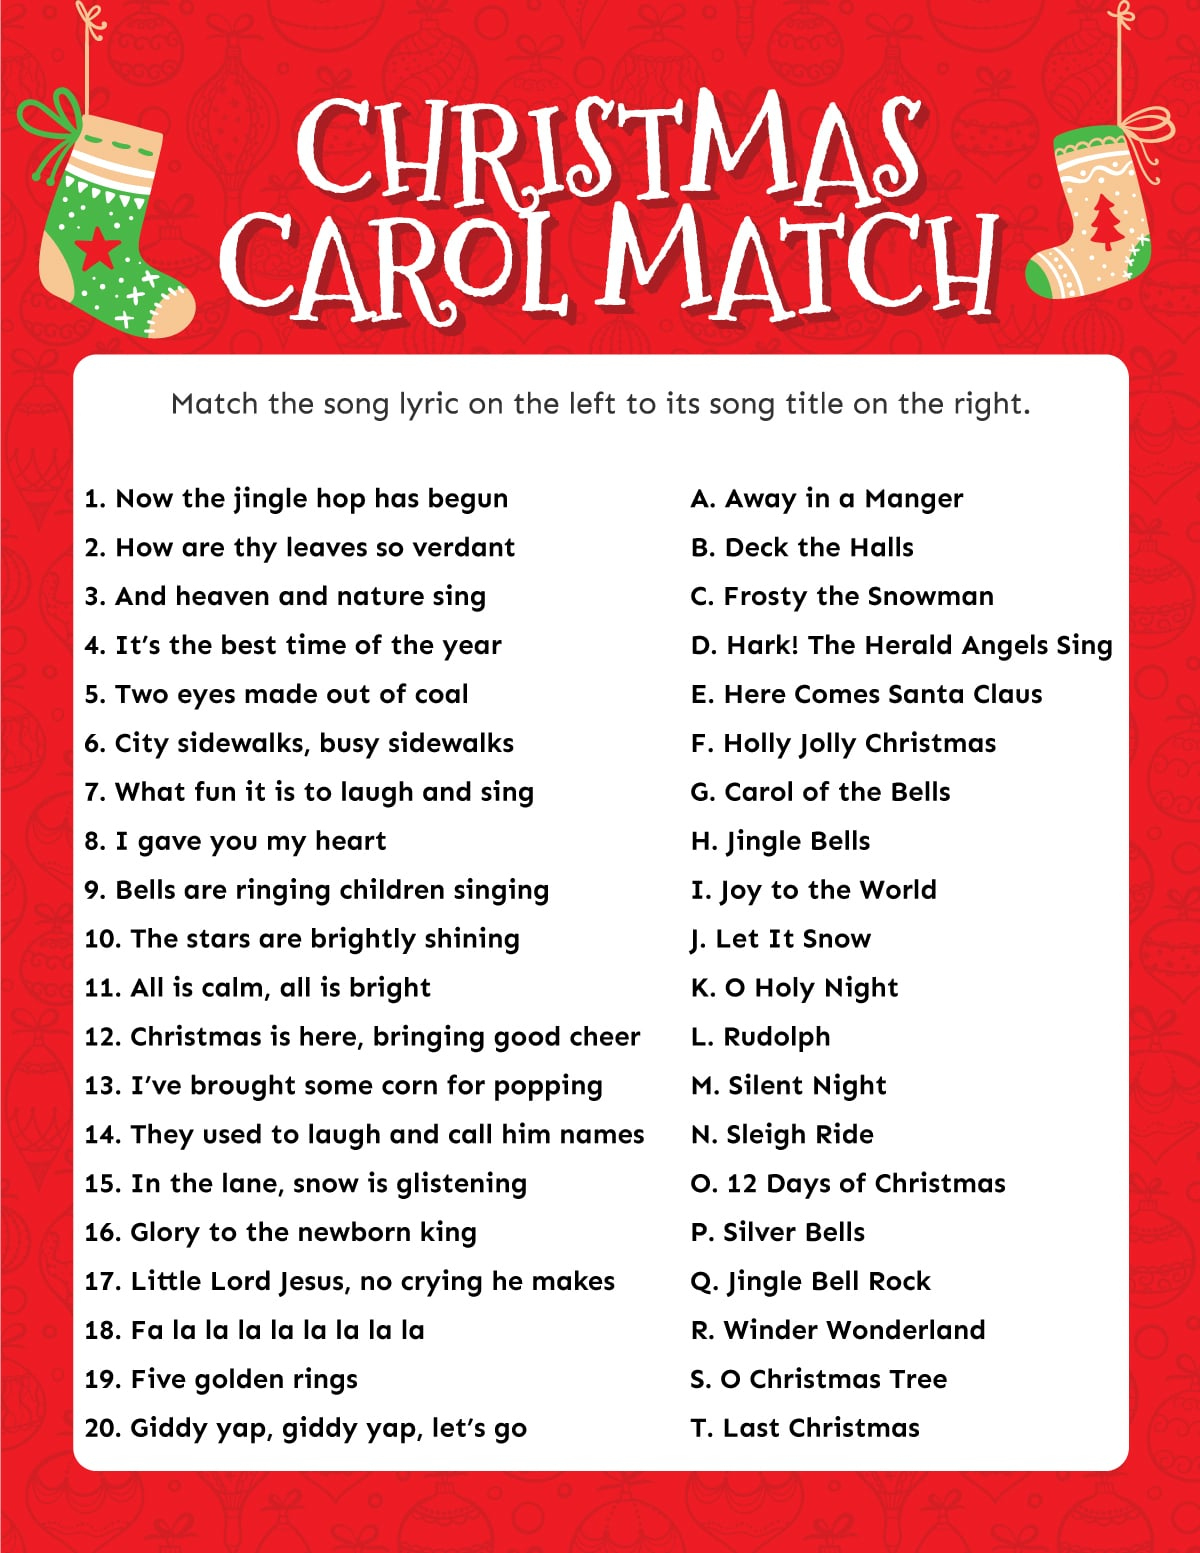 Match The Christmas Carol Game (Free Printable!) - Play Party Plan intended for Christmas Song Lyrics Game Free Printable